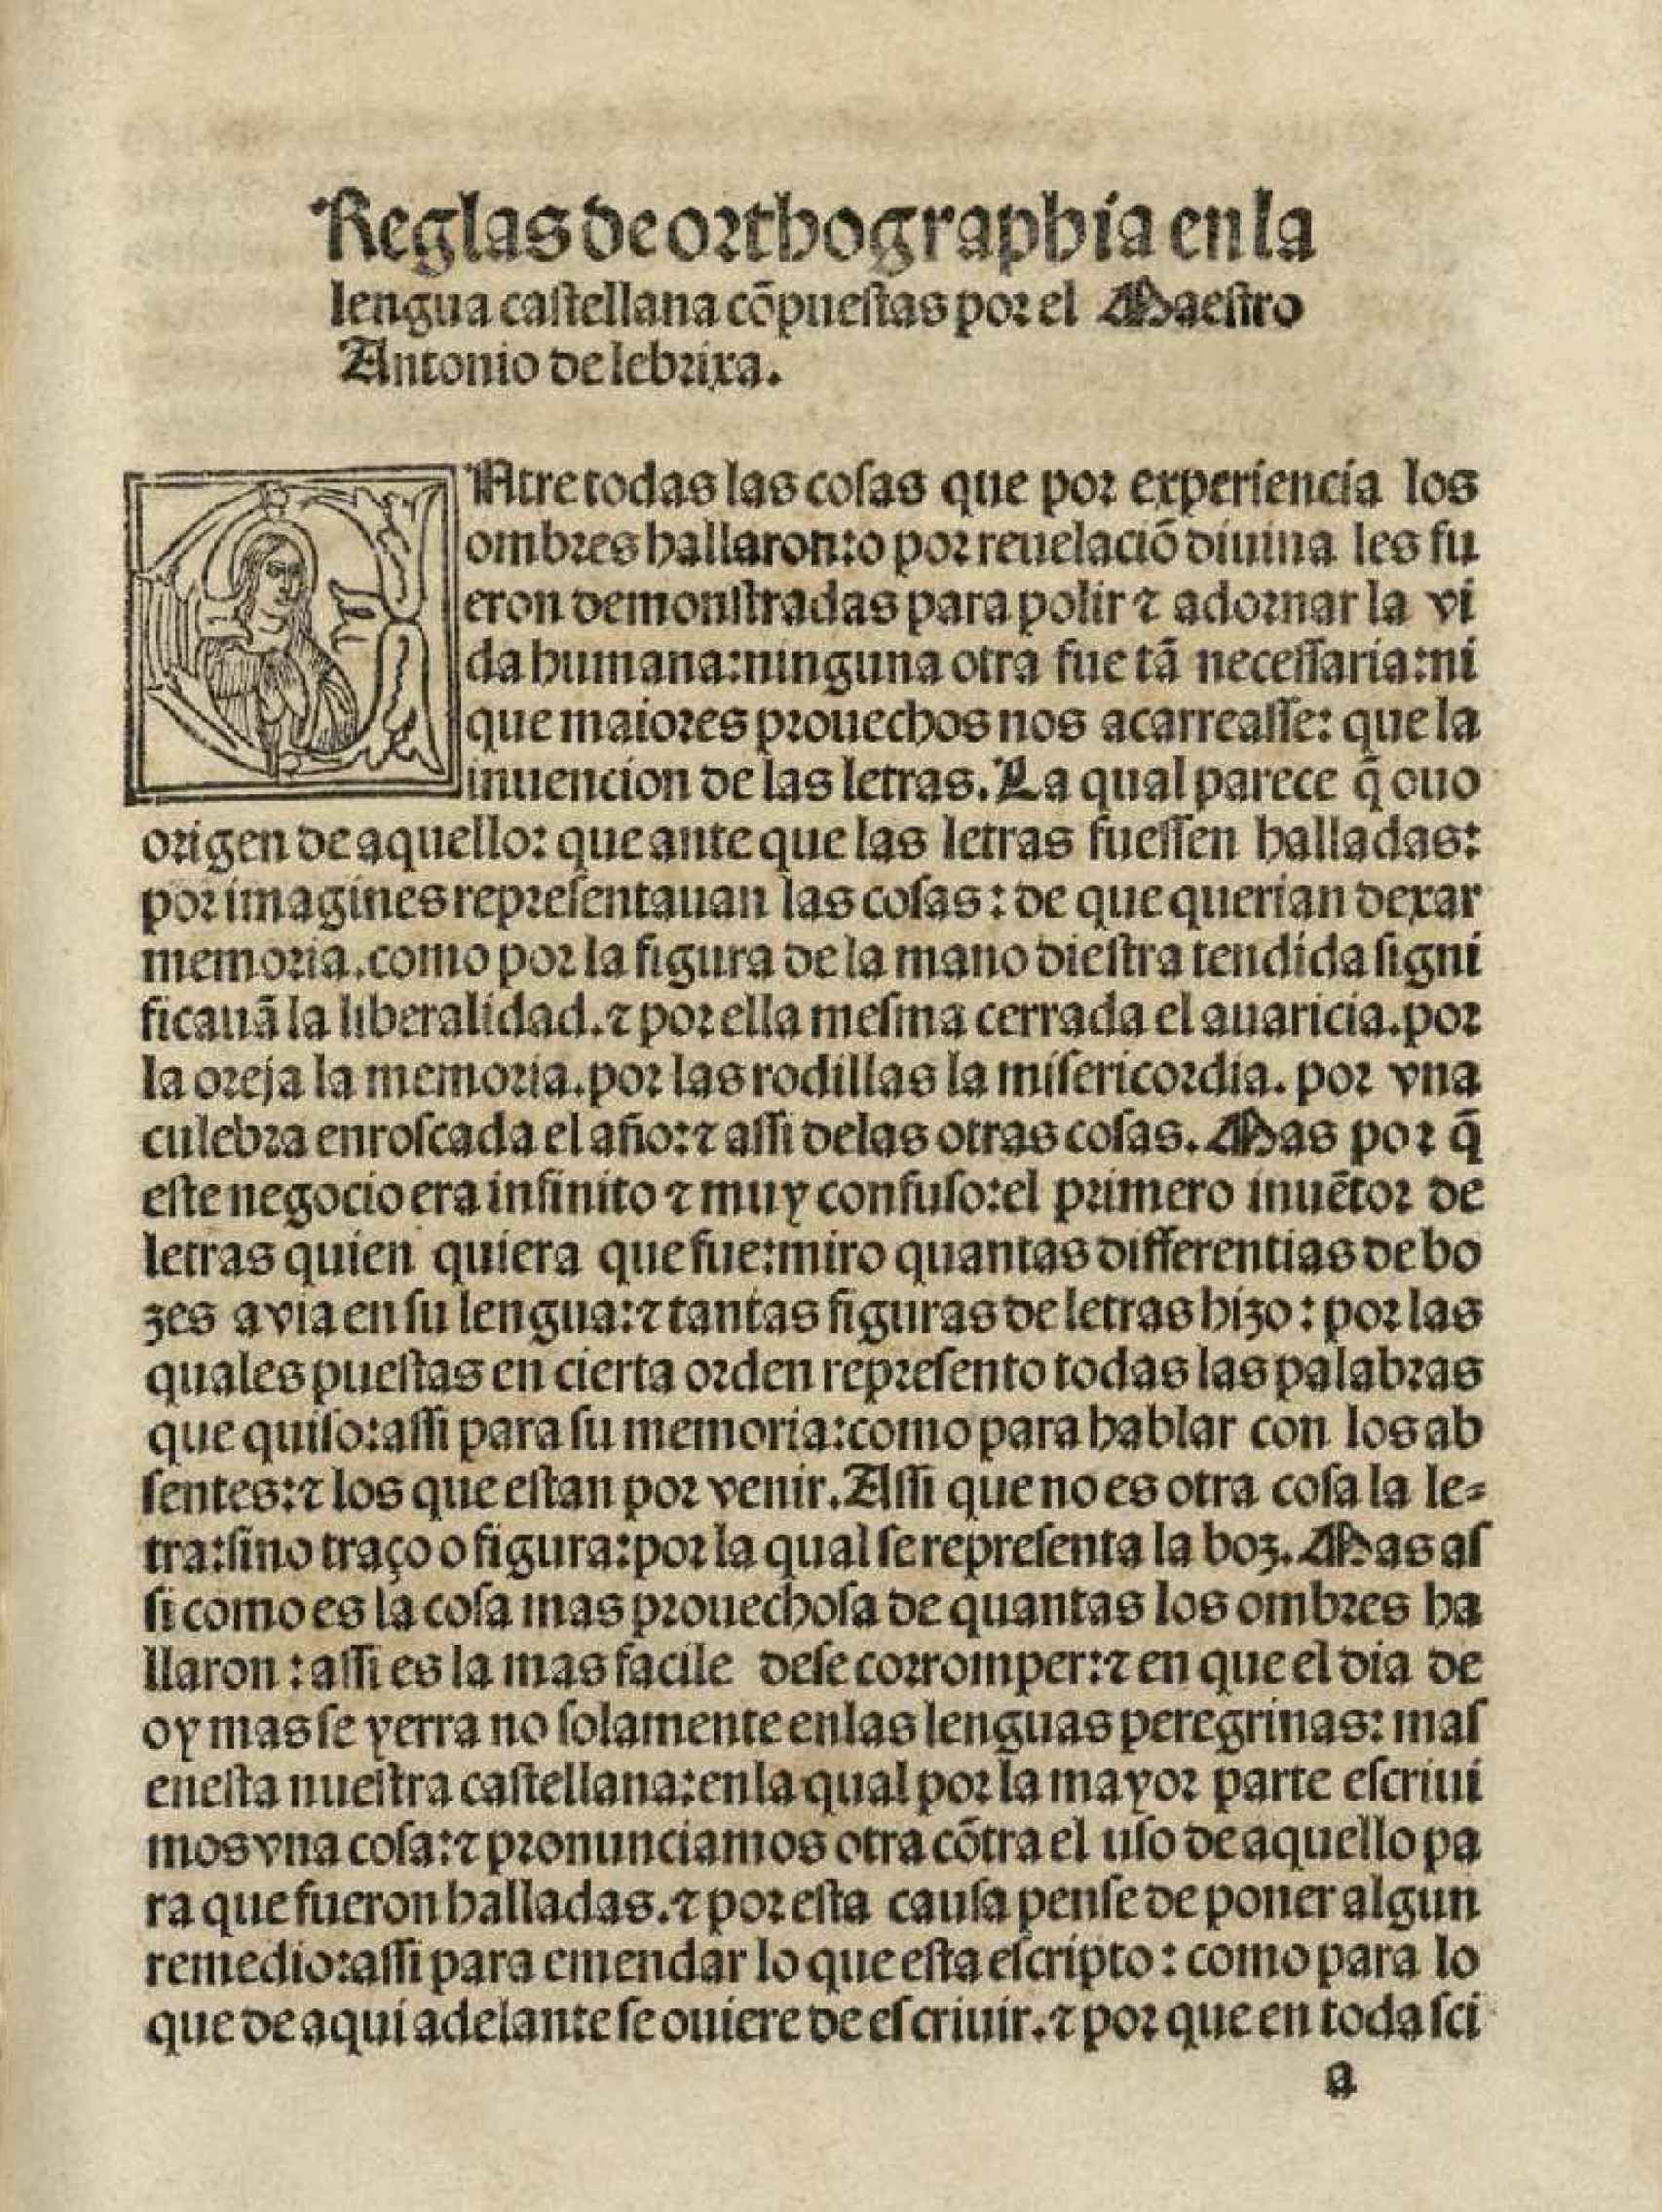 Las Reglas de orthographia en la lengua castellana de Antonio de Nebrija, la primera ortografía española editada en 1517.